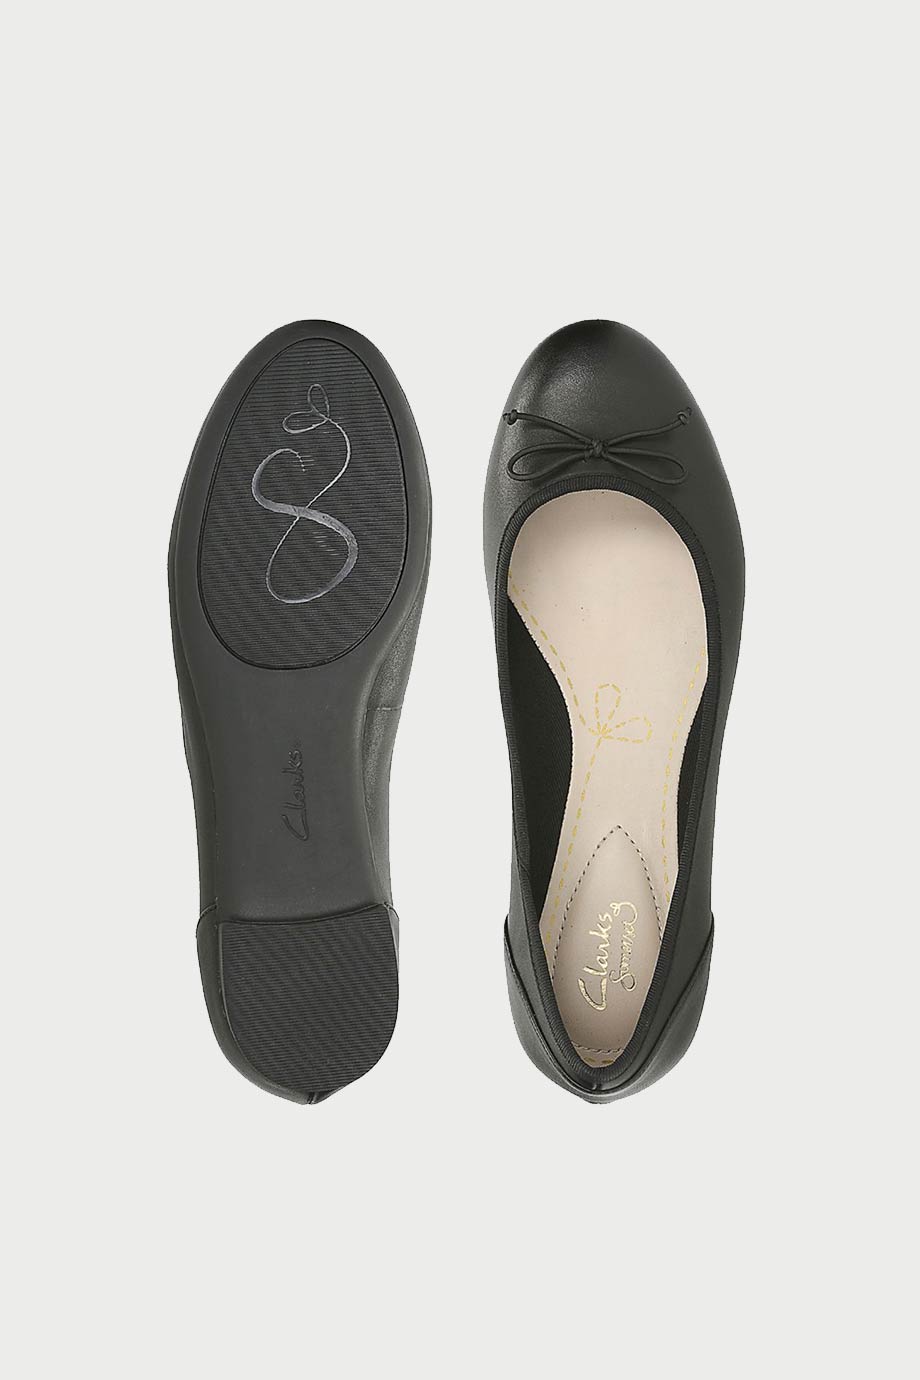 spiridoula metheniti shoes xalkida p Couture Bloom clarks black leather 7